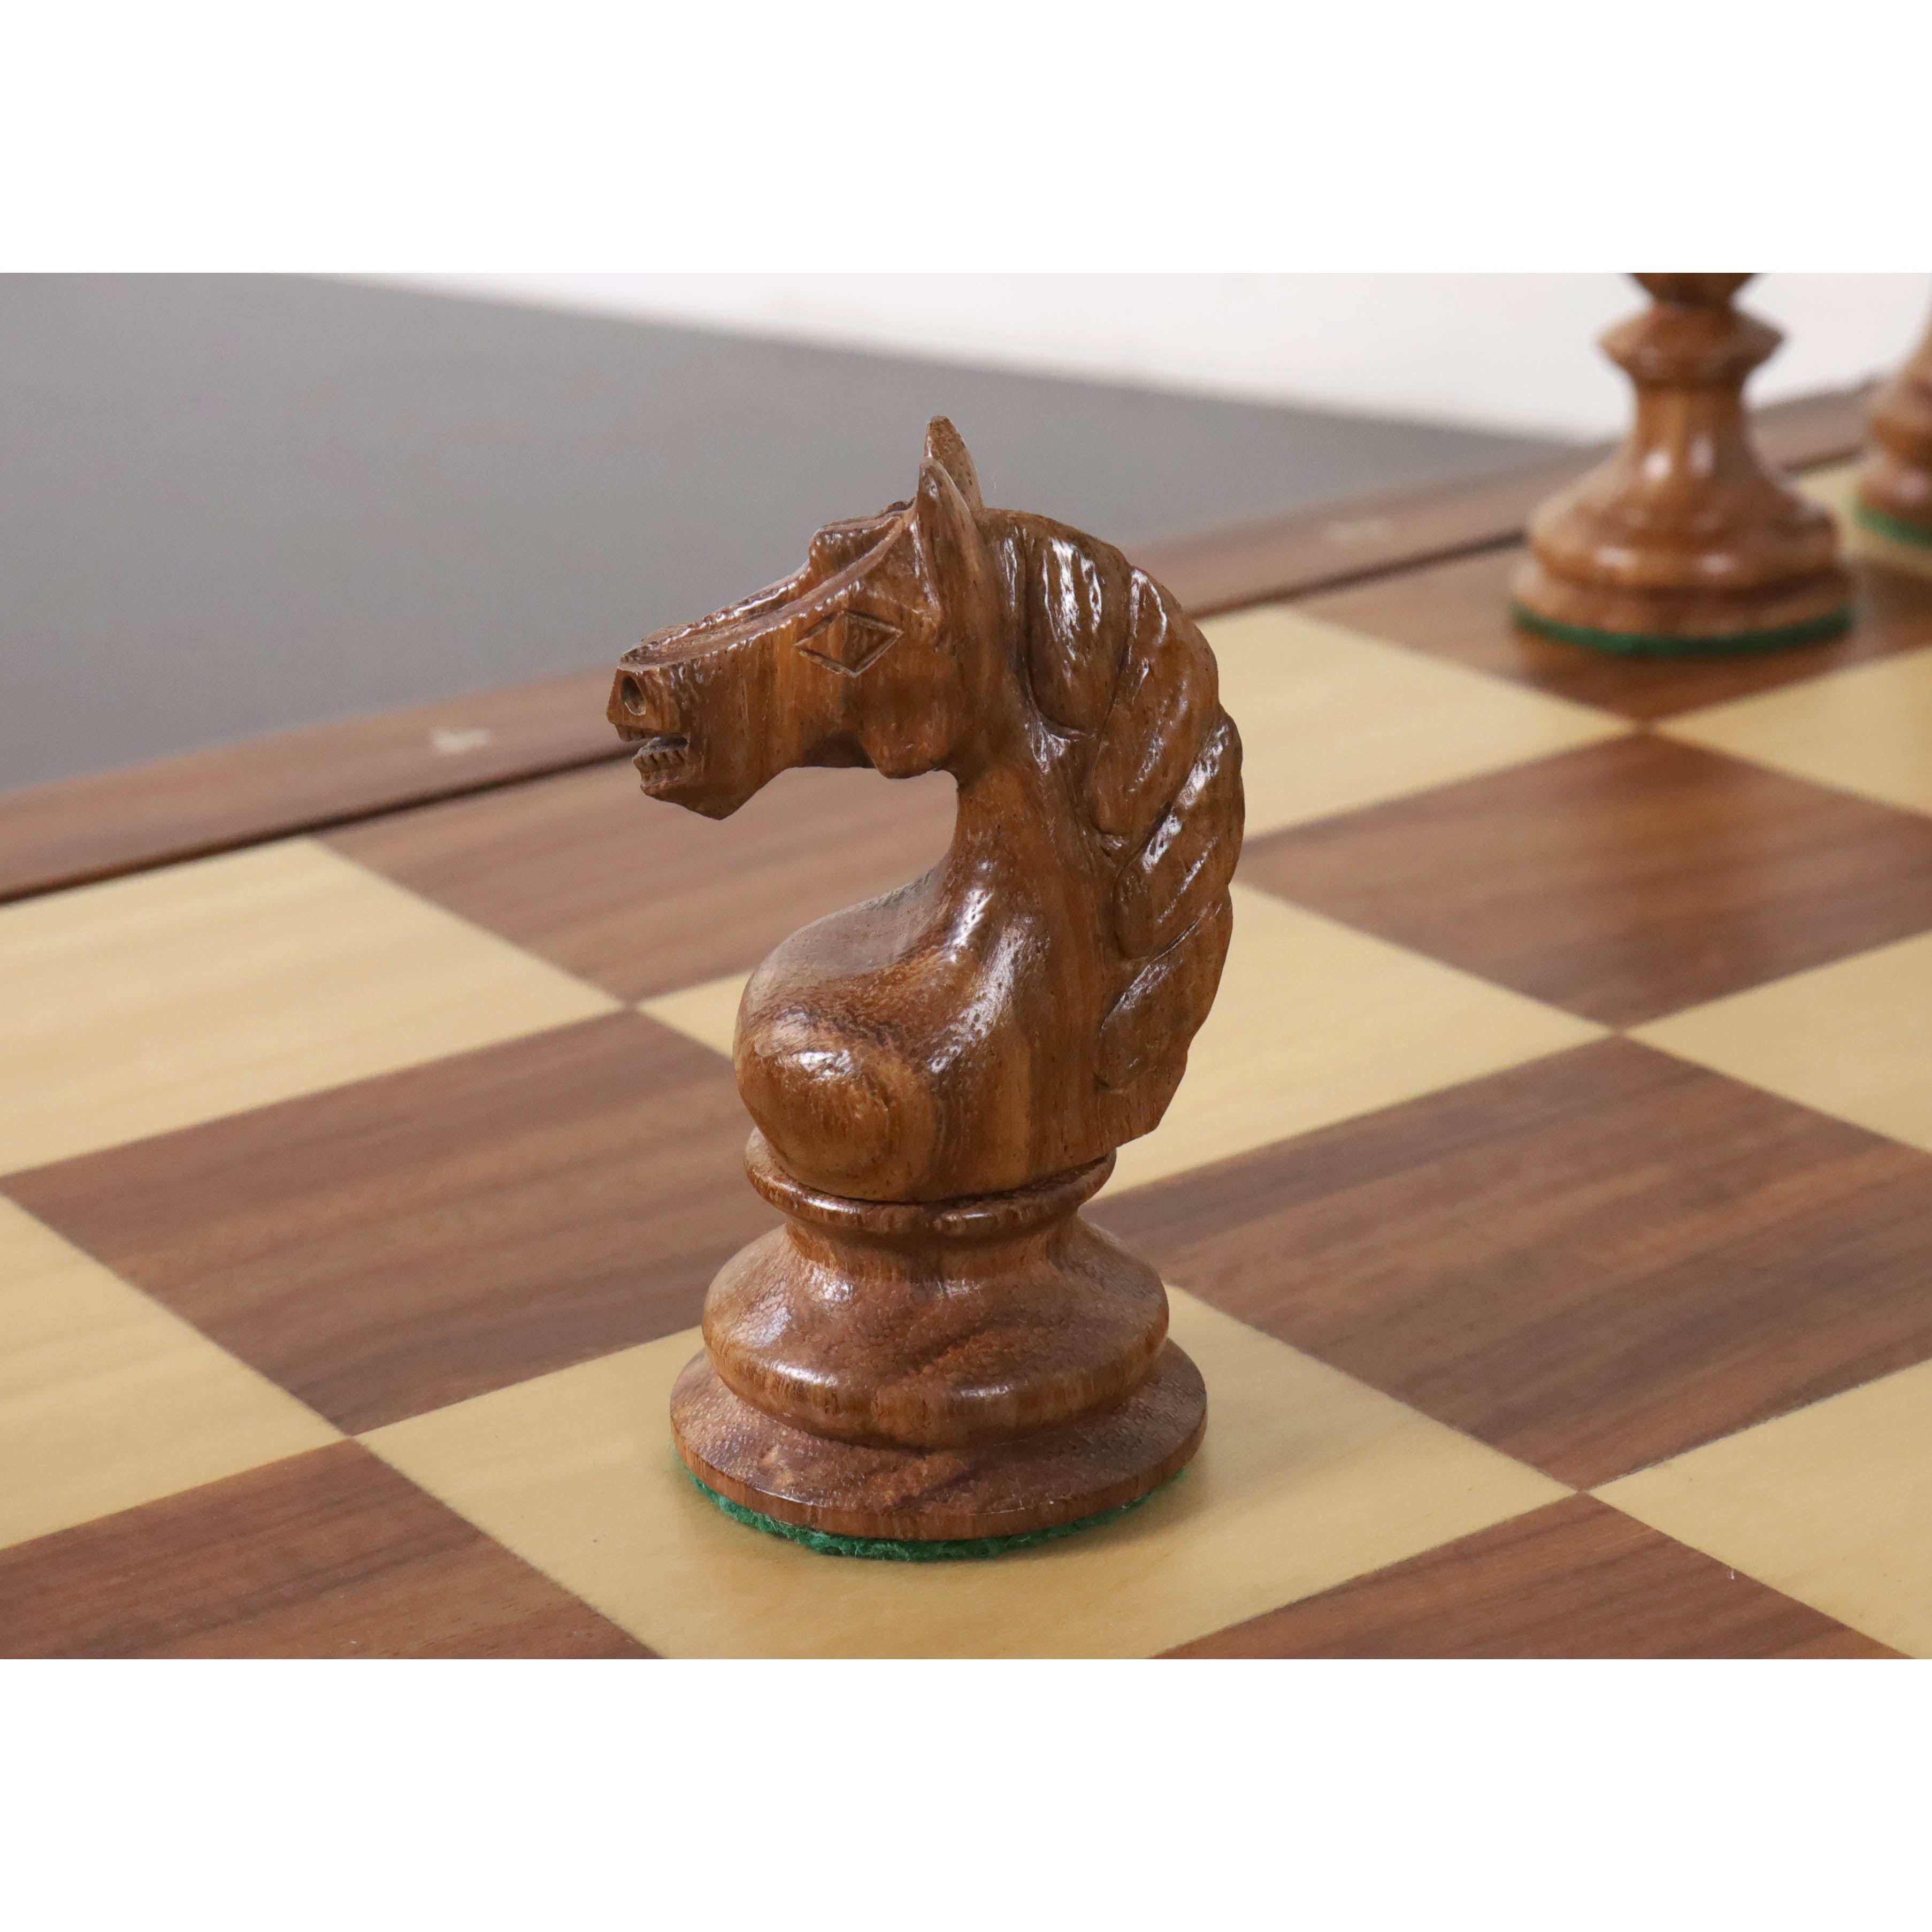 1933 Botvinnik Flohr-I Soviet Chess Pieces Only Set - Golden Rosewood - 3.6" King